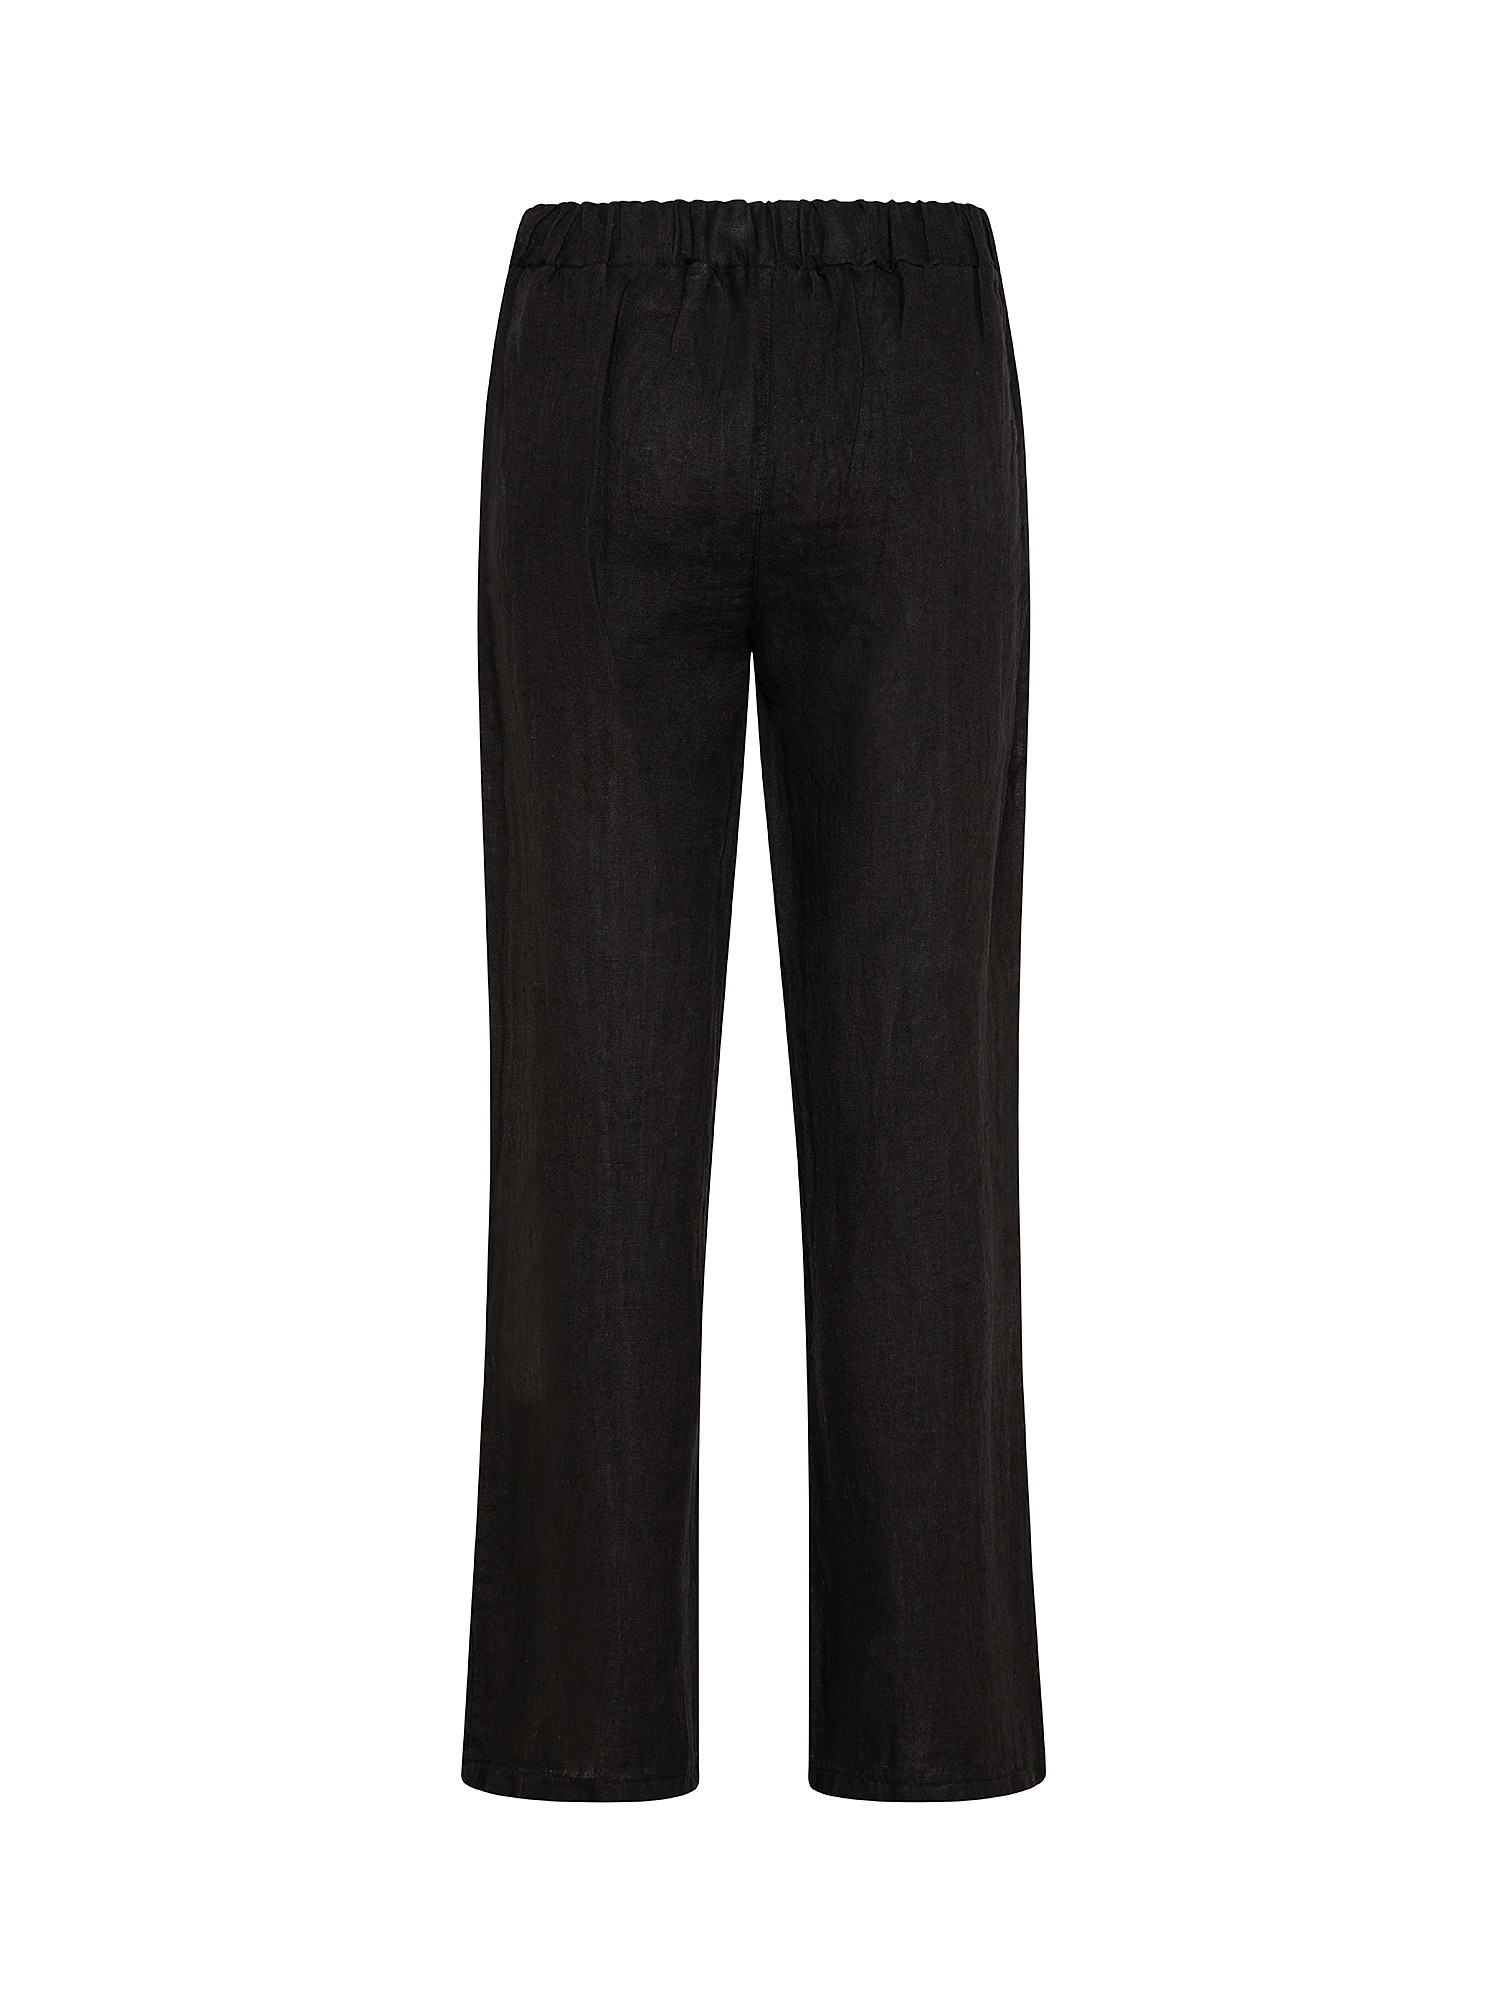 Pantalone puro lino con spacco, Nero, large image number 1